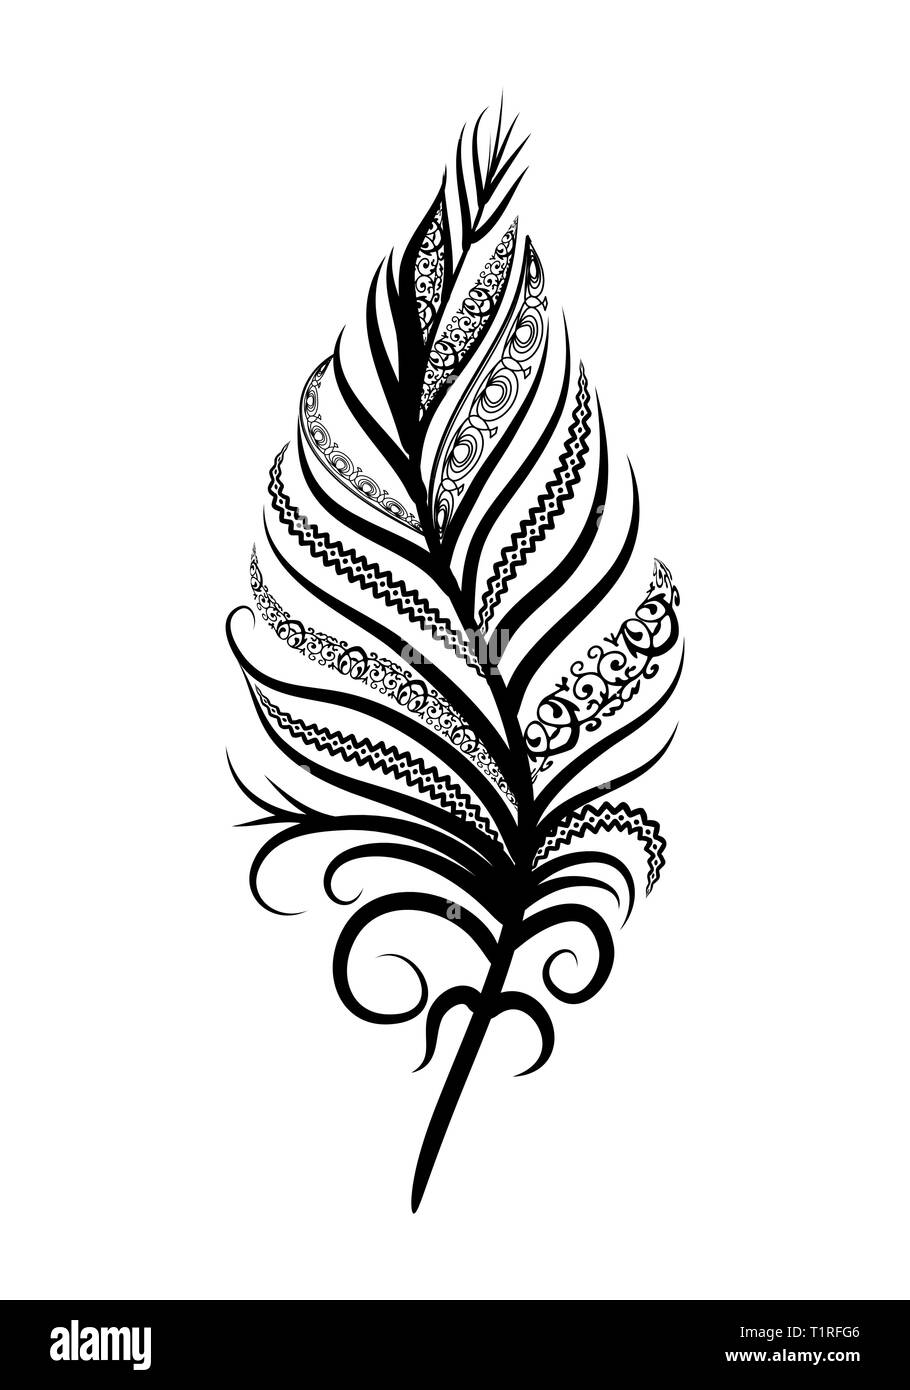 Tatuaje de plumas Imágenes recortadas de stock - Alamy